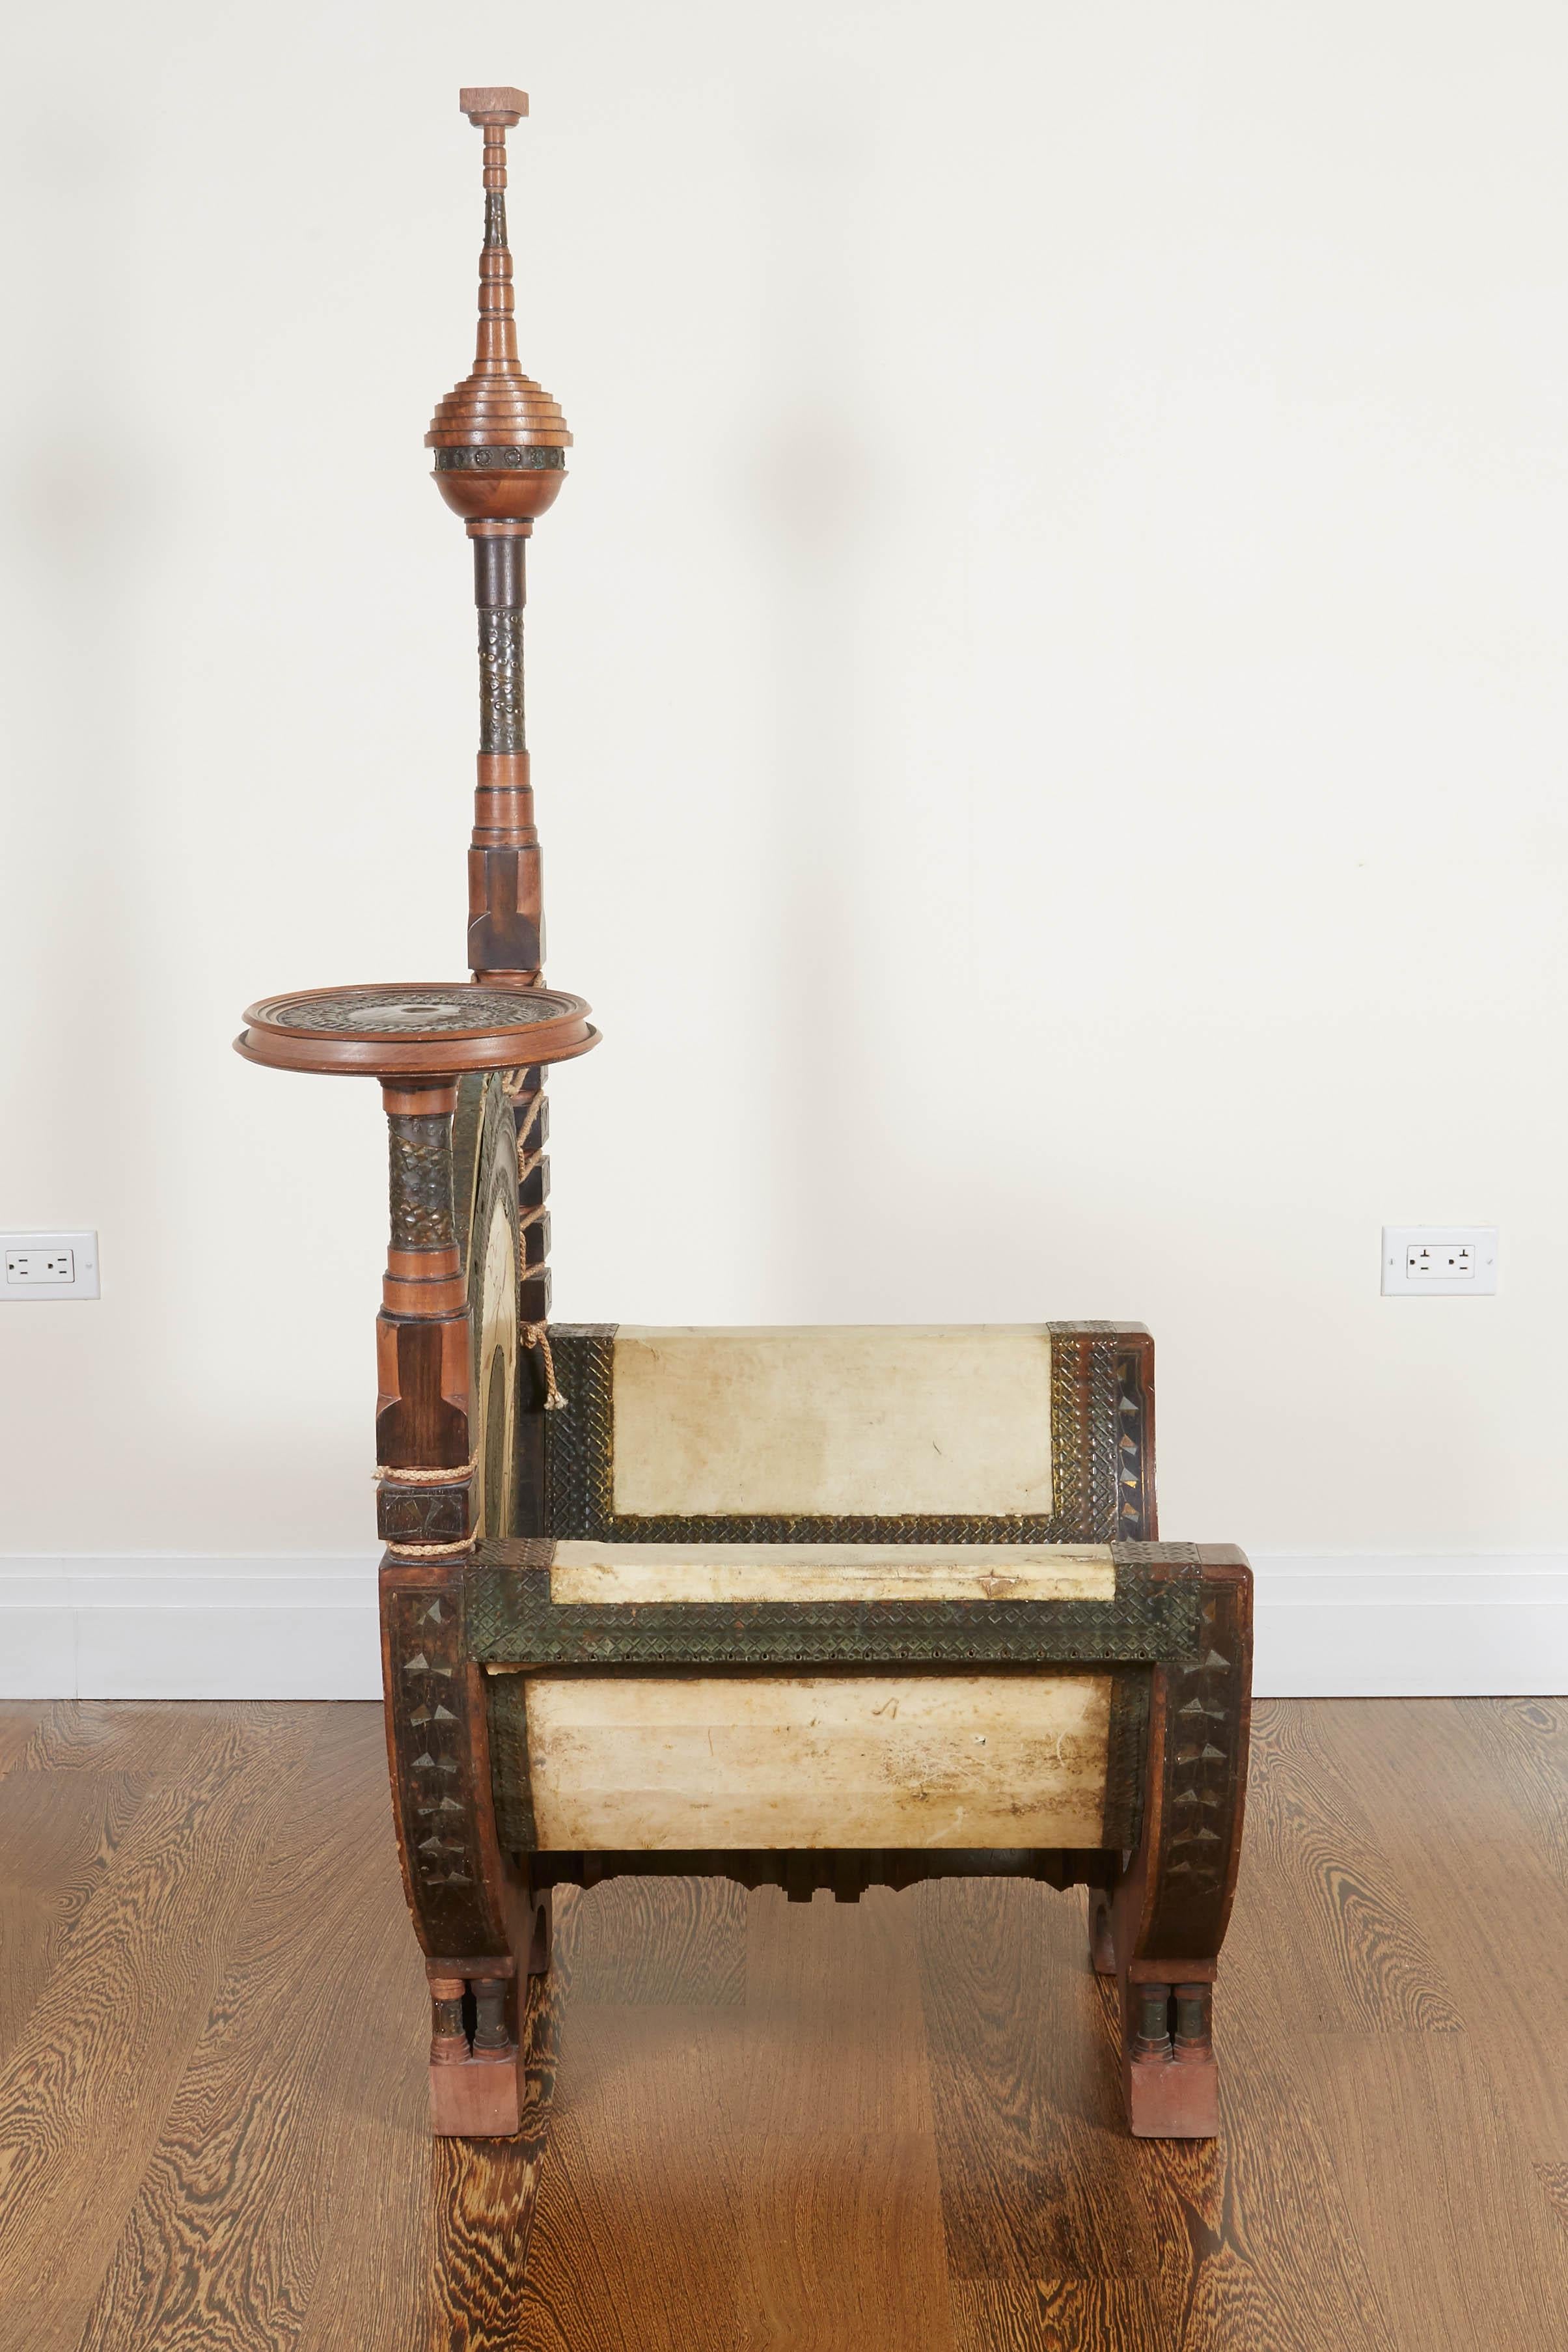 Early 20th Century Carlo Bugatti Throne Chair in Ebonized Wood, Vellum and Copper